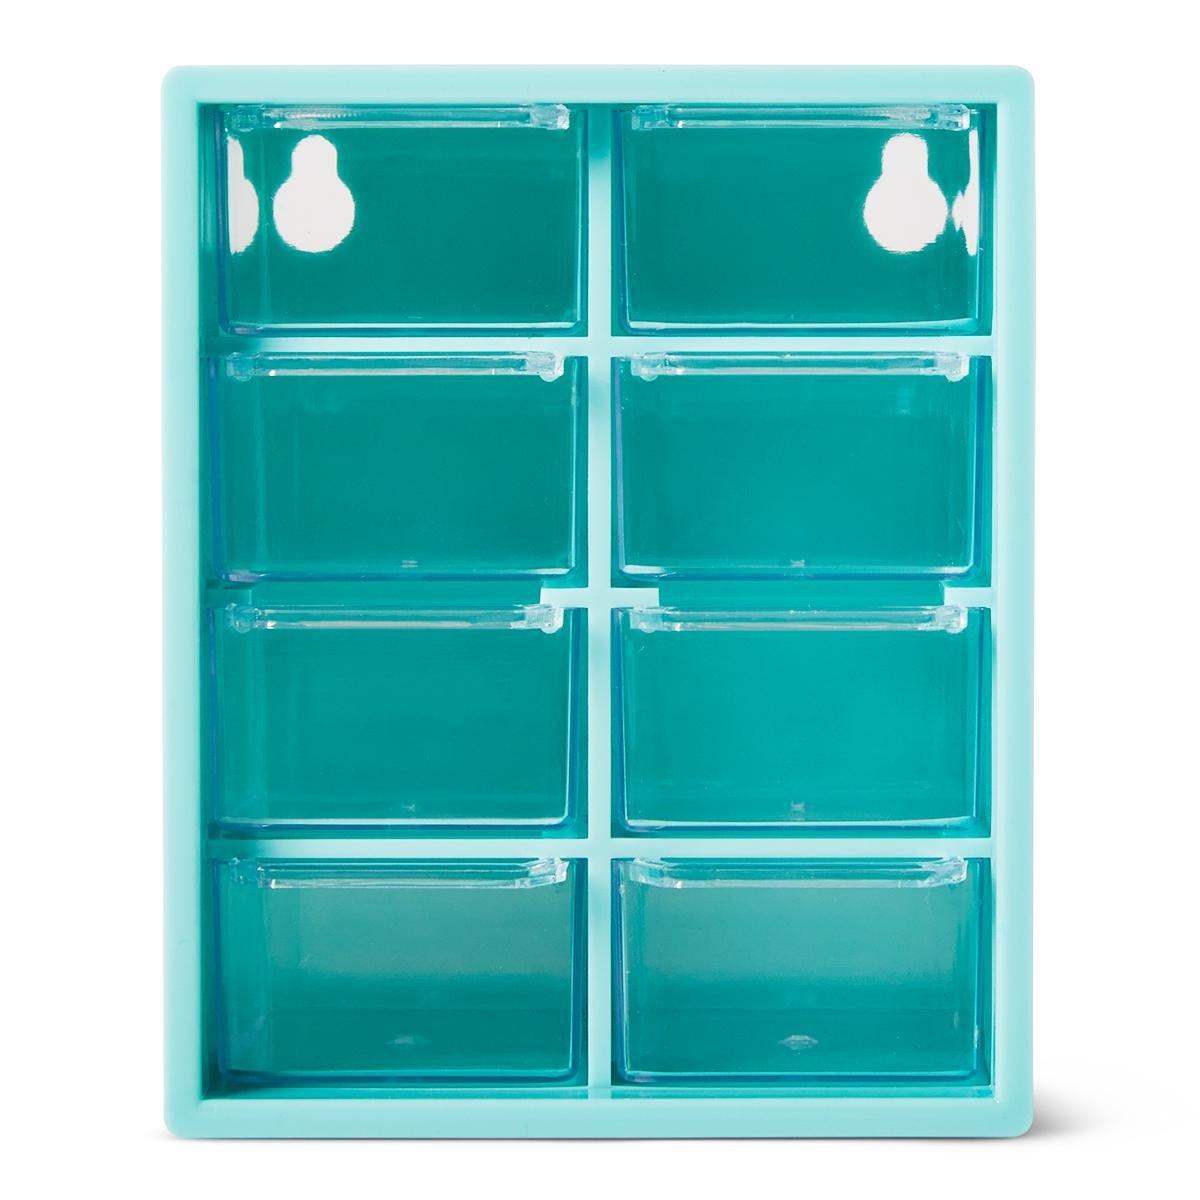 Turquoise drawers storage box